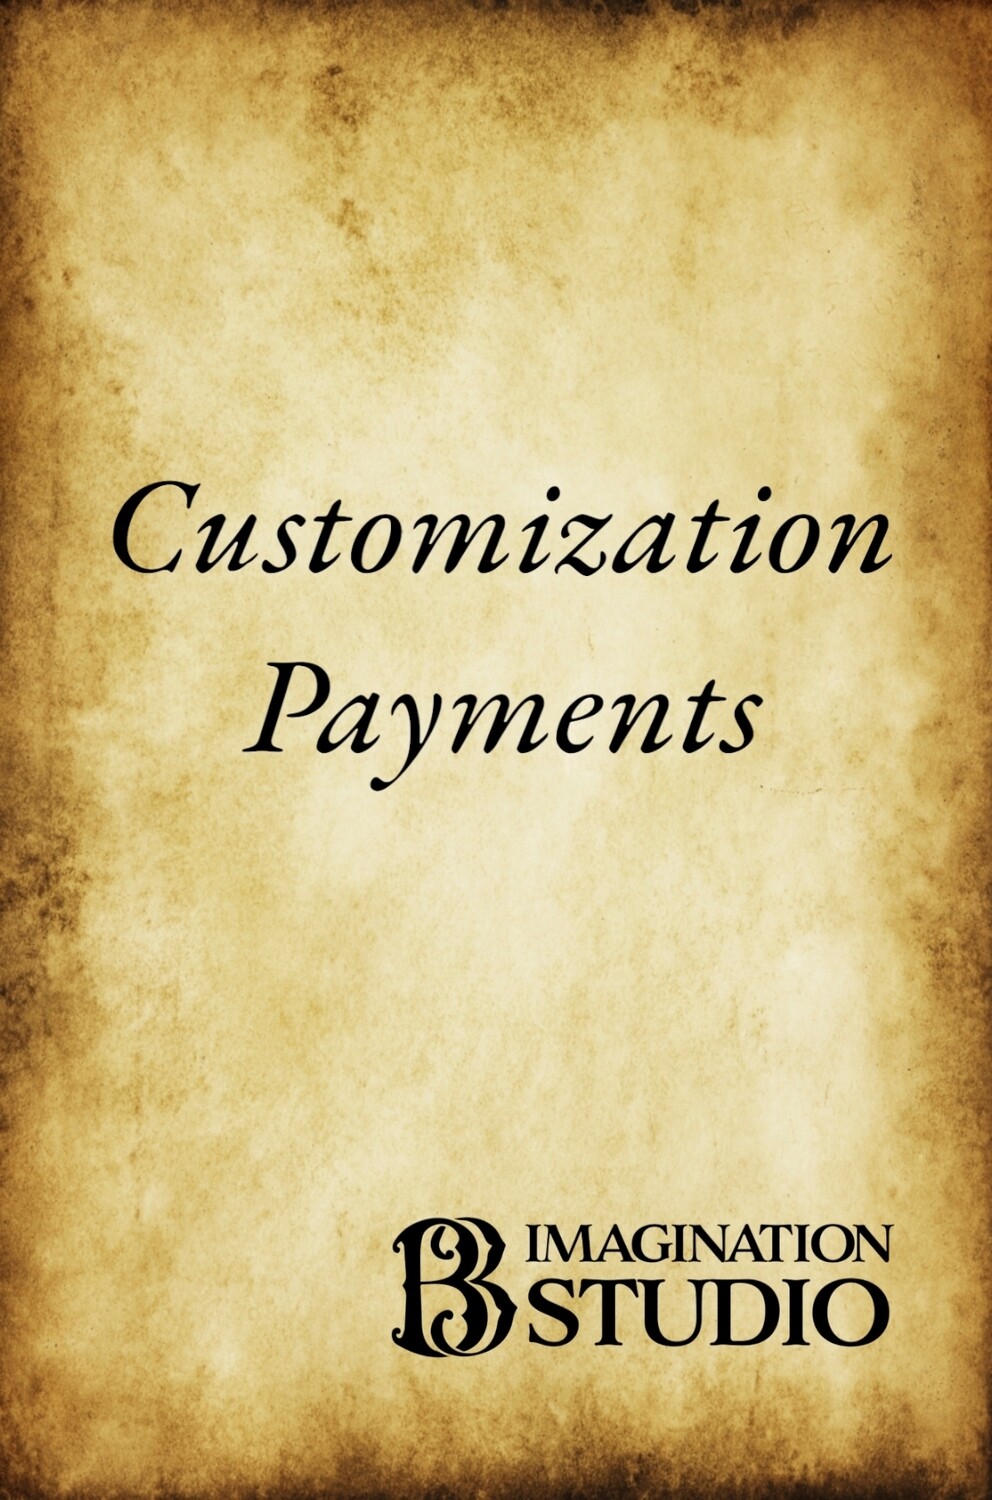 customization payments